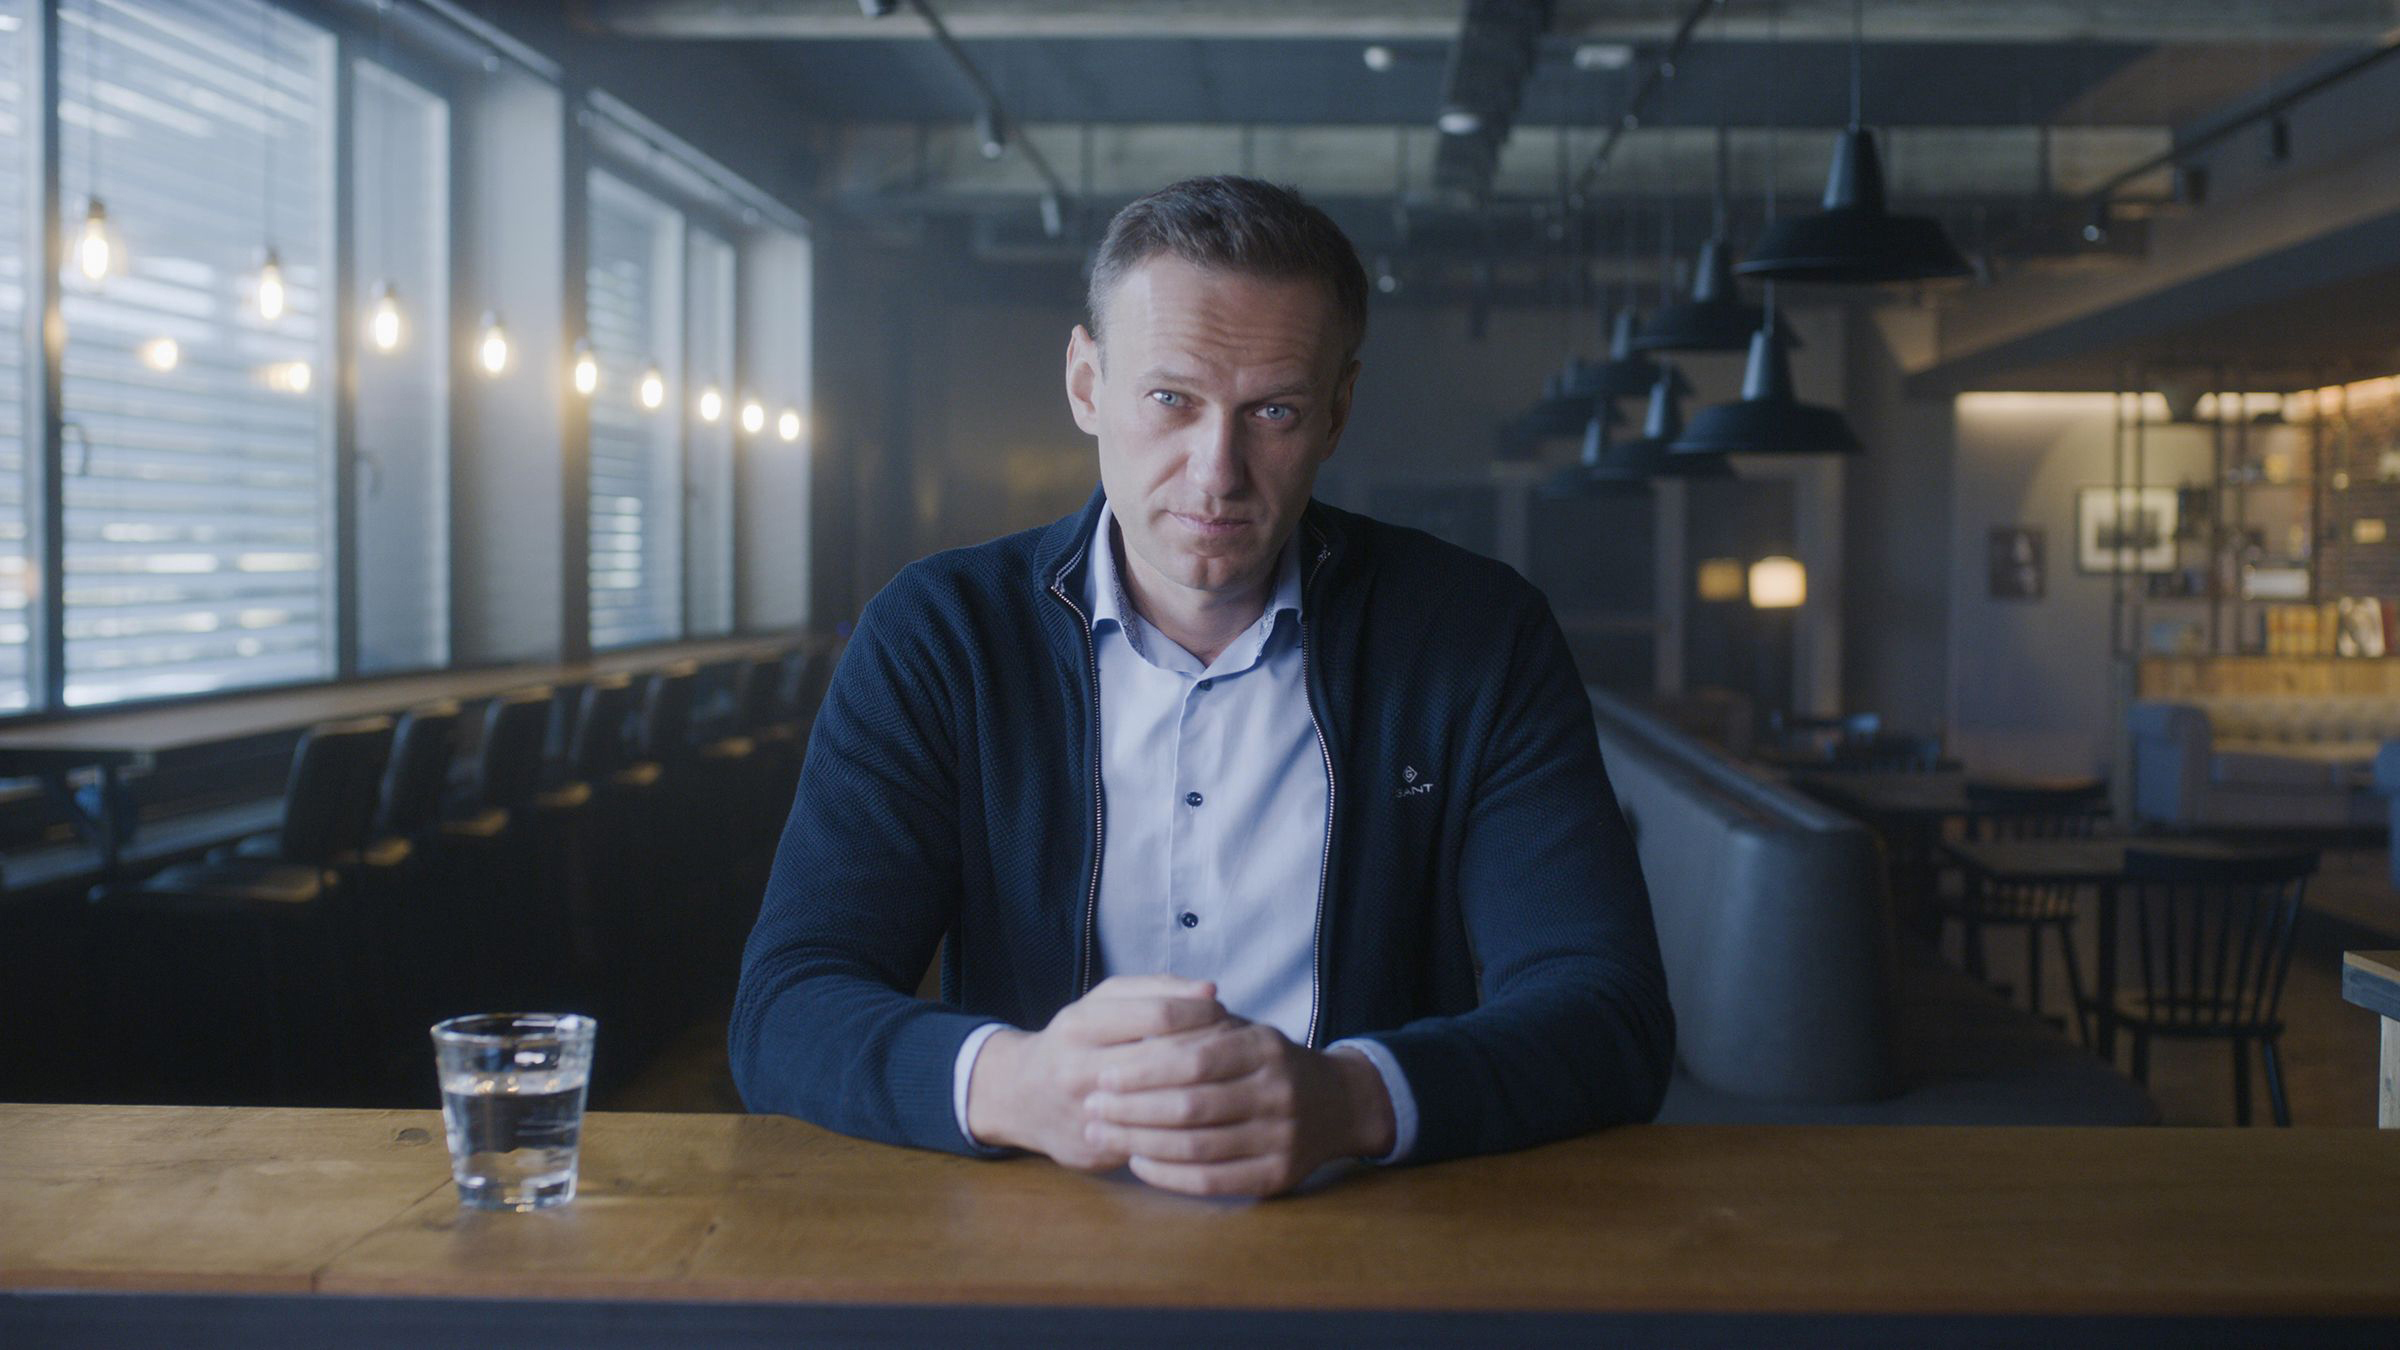 The tragicomedy of the political prisoner Navalny